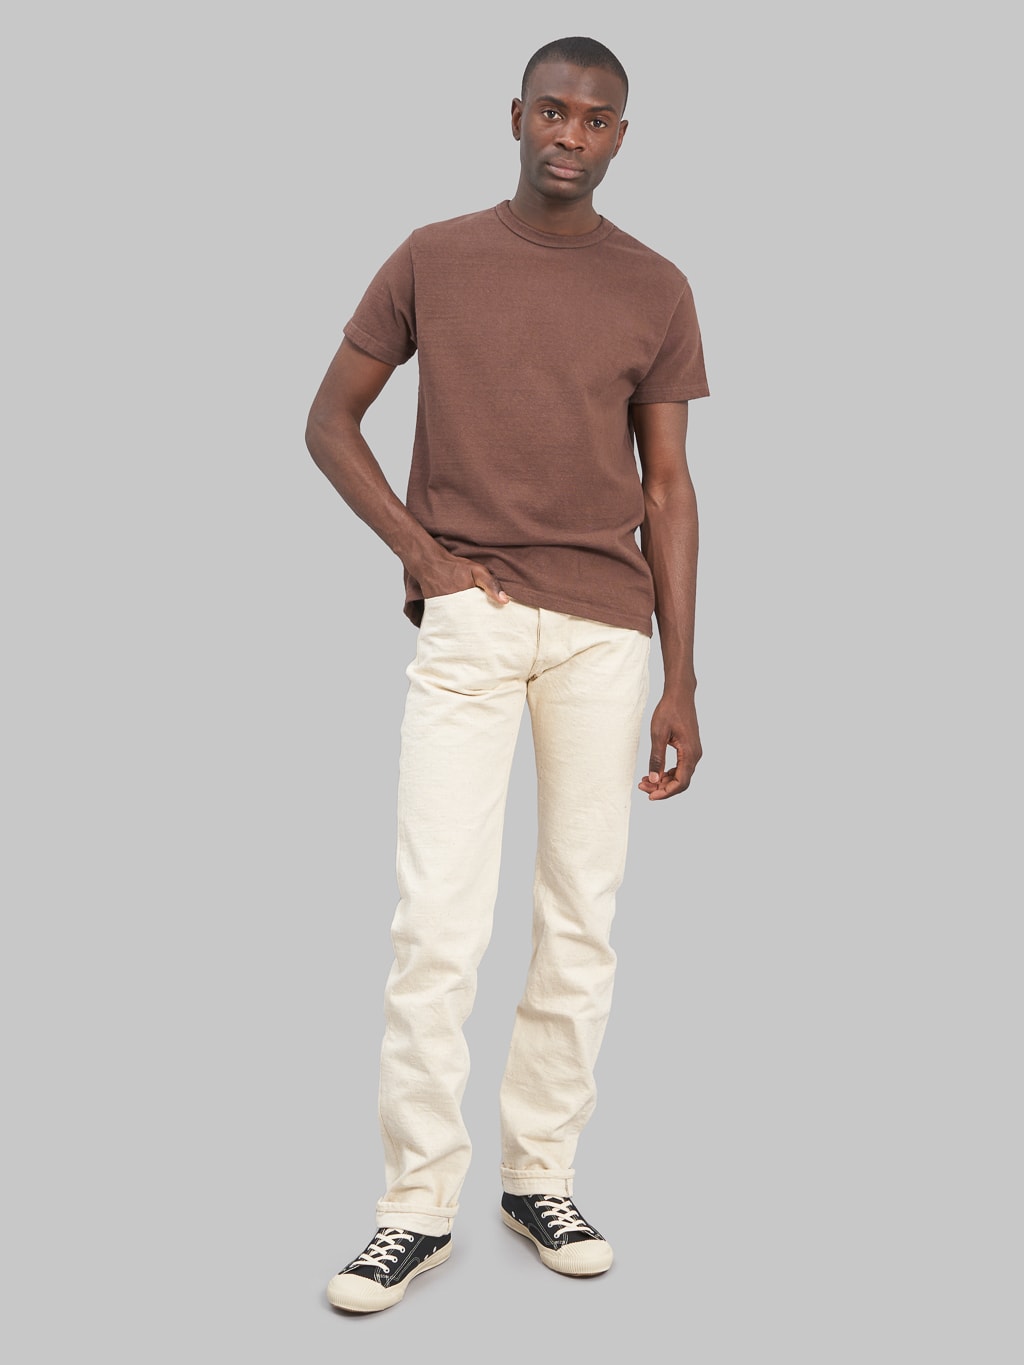 Jacquard Denim Carpenter Pants Size 31